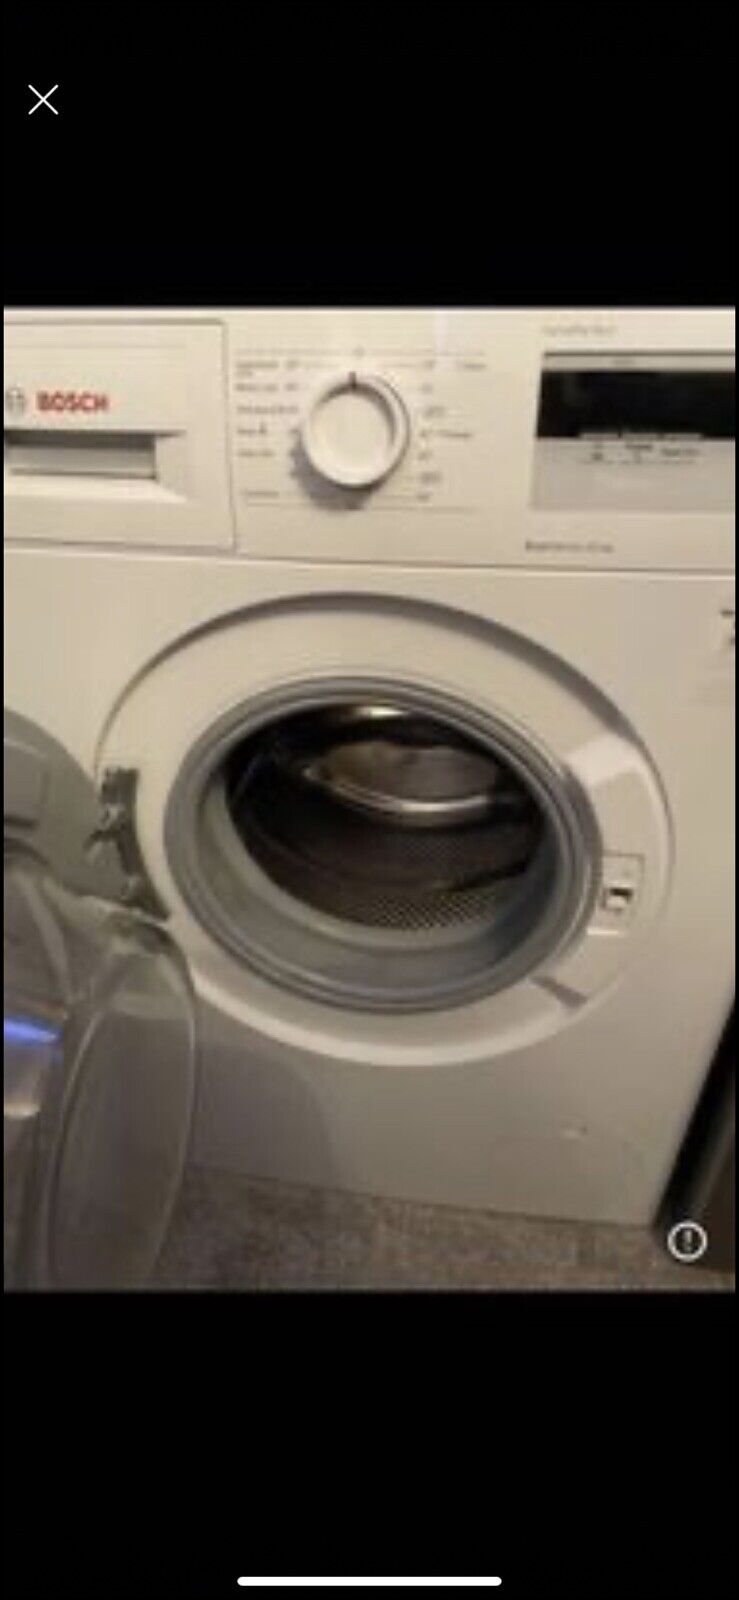 BOSCH 7kg Front-Loading Washing Machine - White